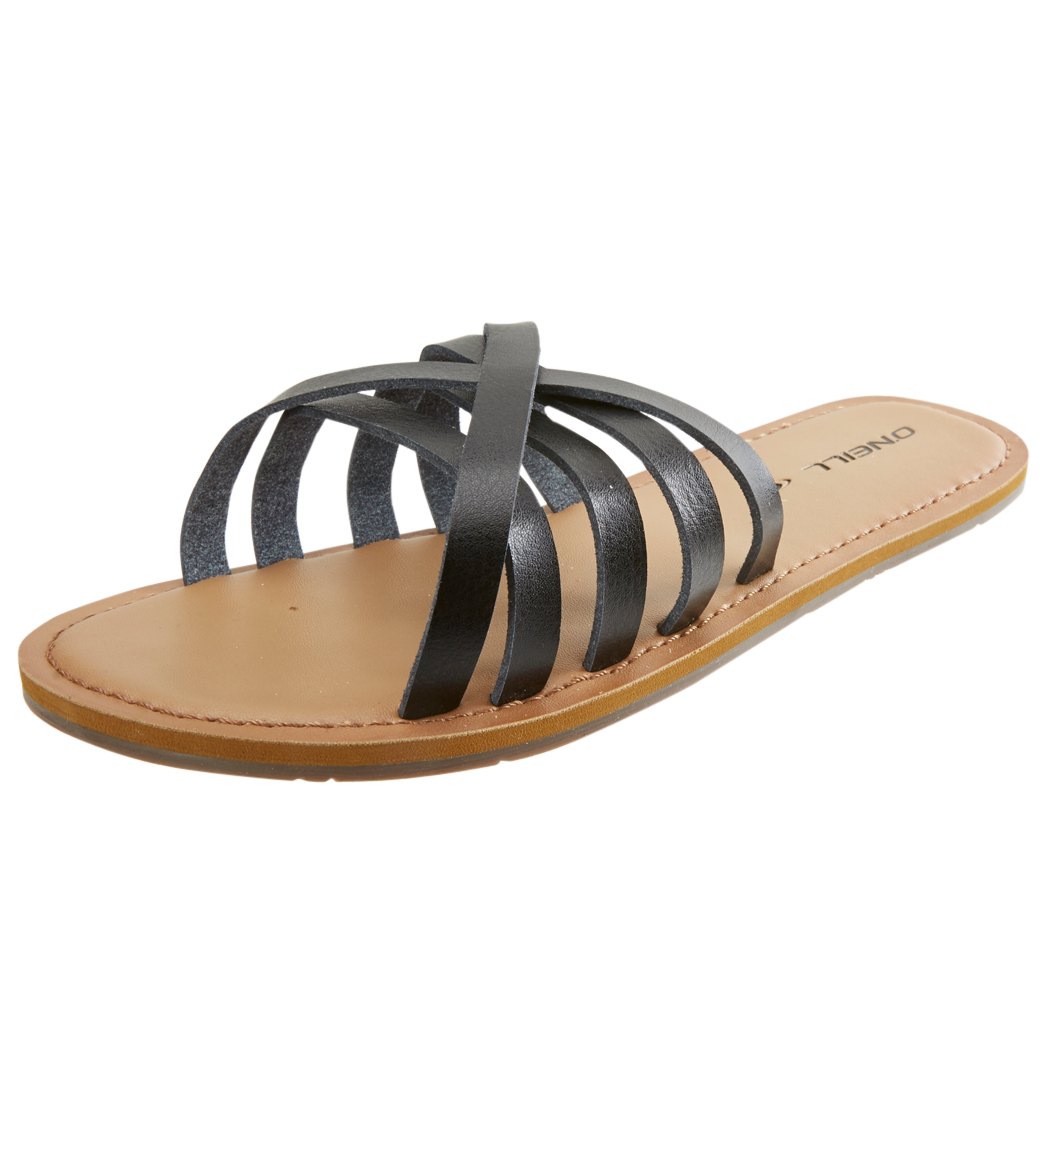 O'neill Women's Balboa Slides Sandals - Black 6 - Swimoutlet.com